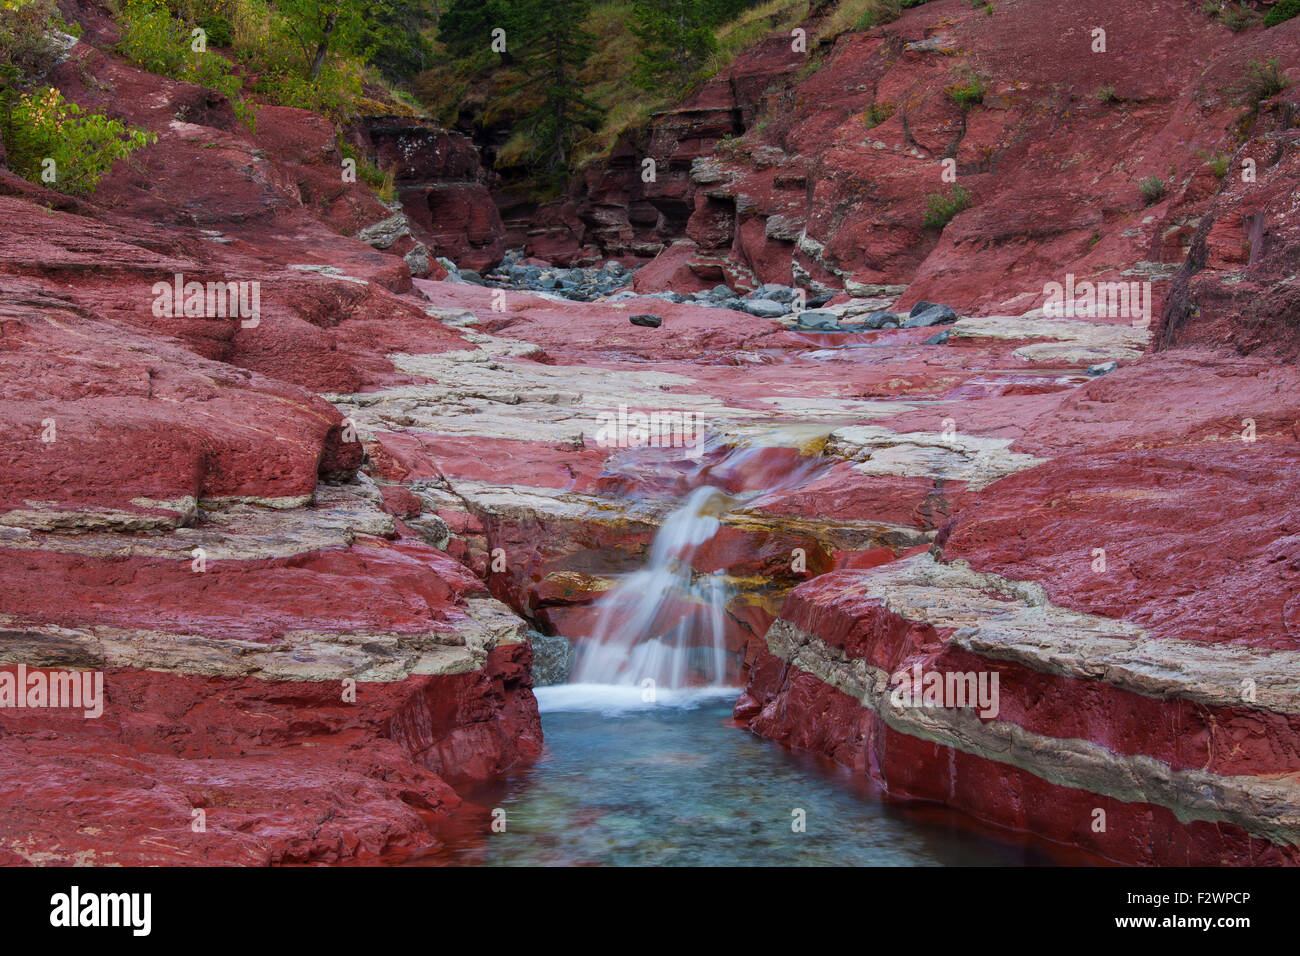 Tonschiefer mineralischen Sedimentschichten in Lost Horse Creek, Red Rock Canyon, Waterton Lakes National Park, Alberta, Kanada Stockfoto